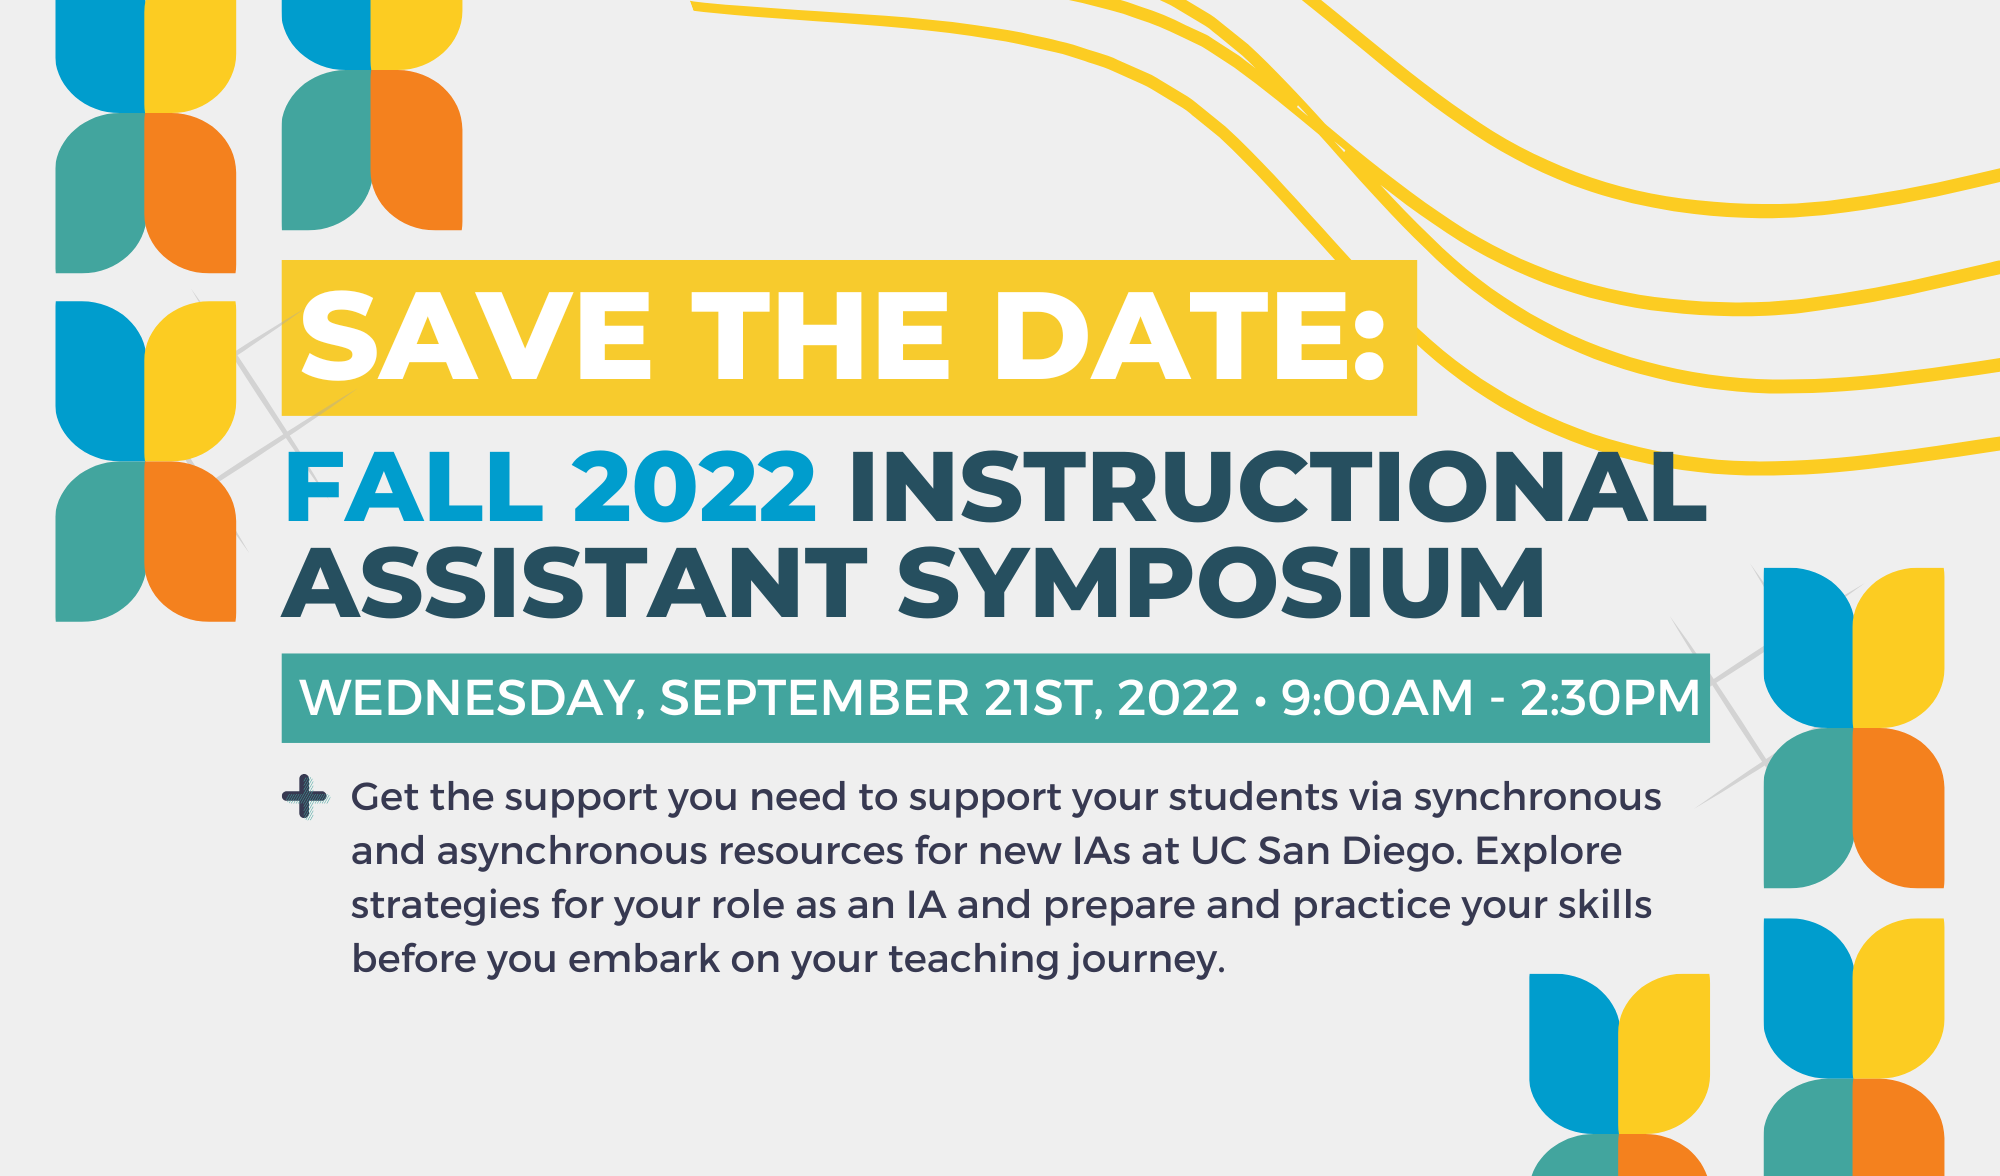 2022 IA Symposium happening September 21, 2022